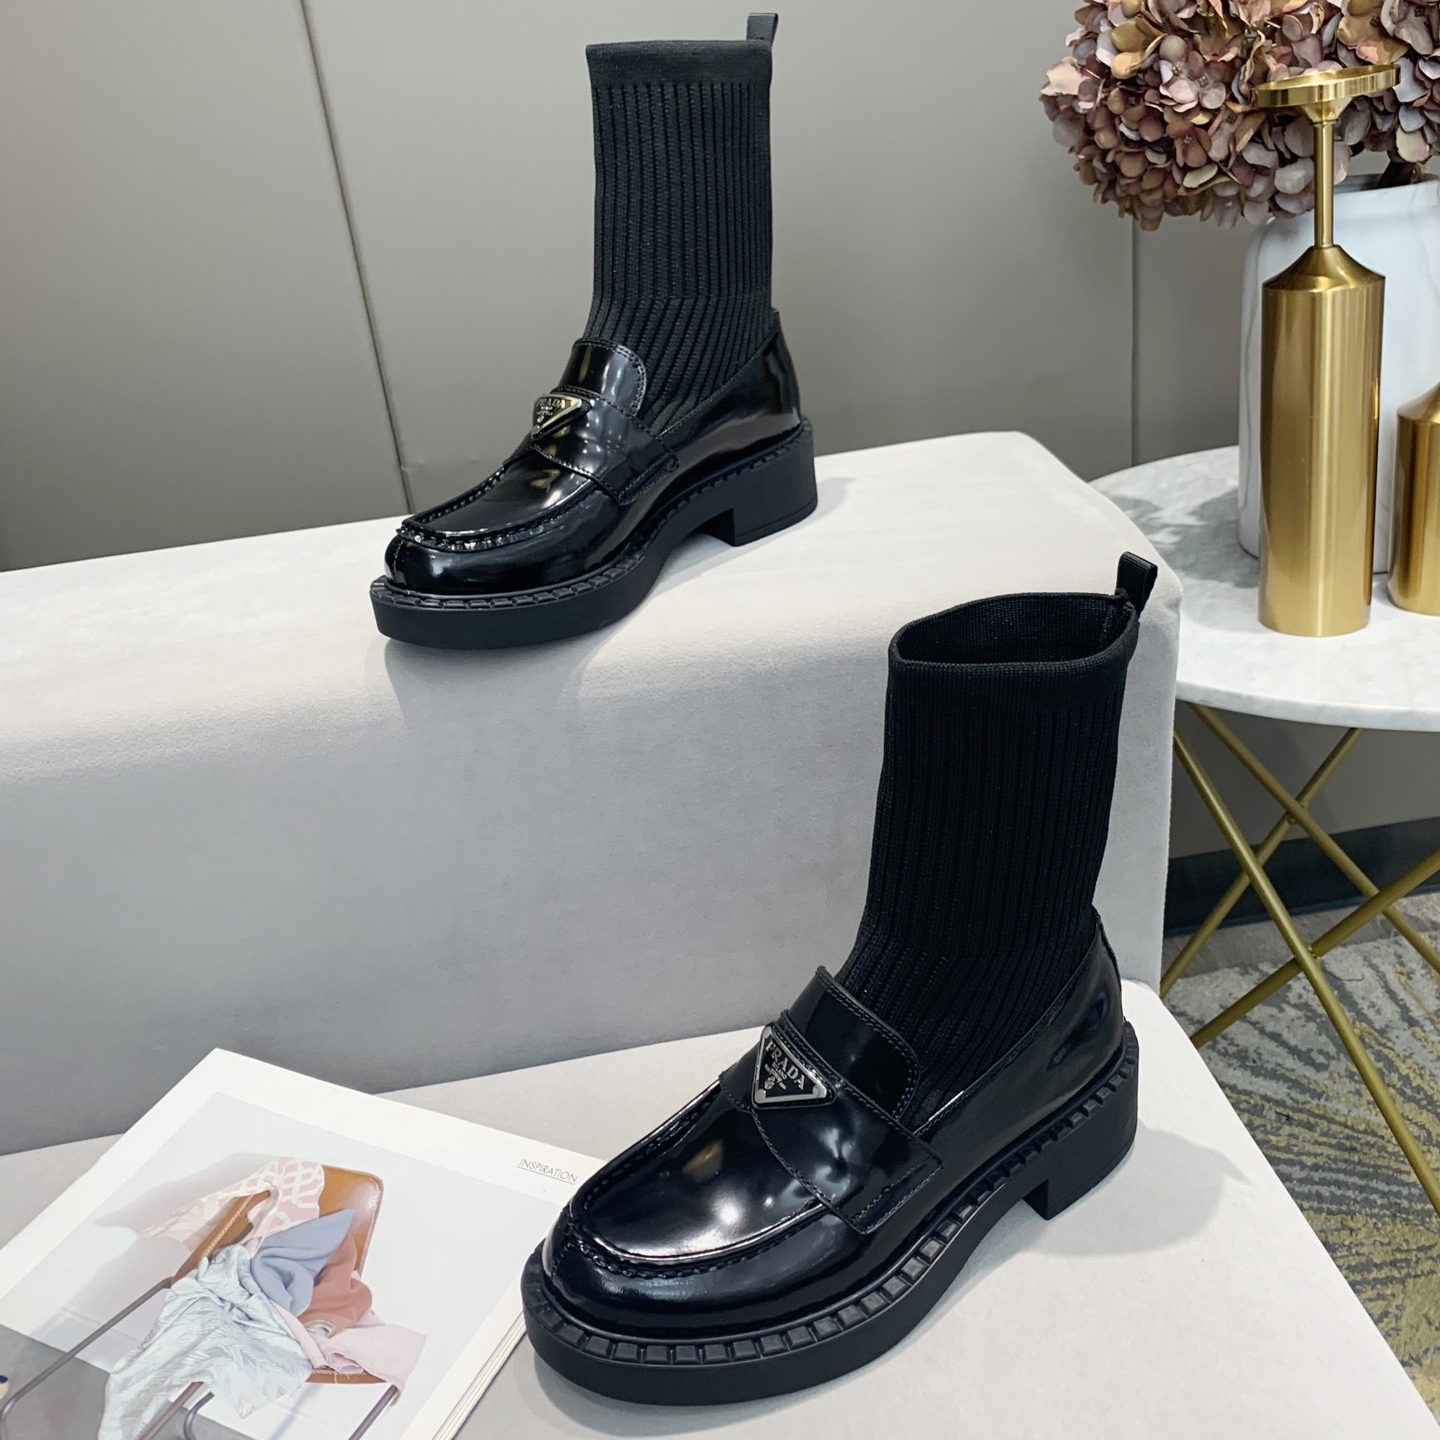 Dobre predávané ponožky Čižmy CalvinLuo móda luxusná známa značka Milan Fashion Week dámske značkové topánky a falošné značkové topánky aj vysoko kvalitné značkové podpätky